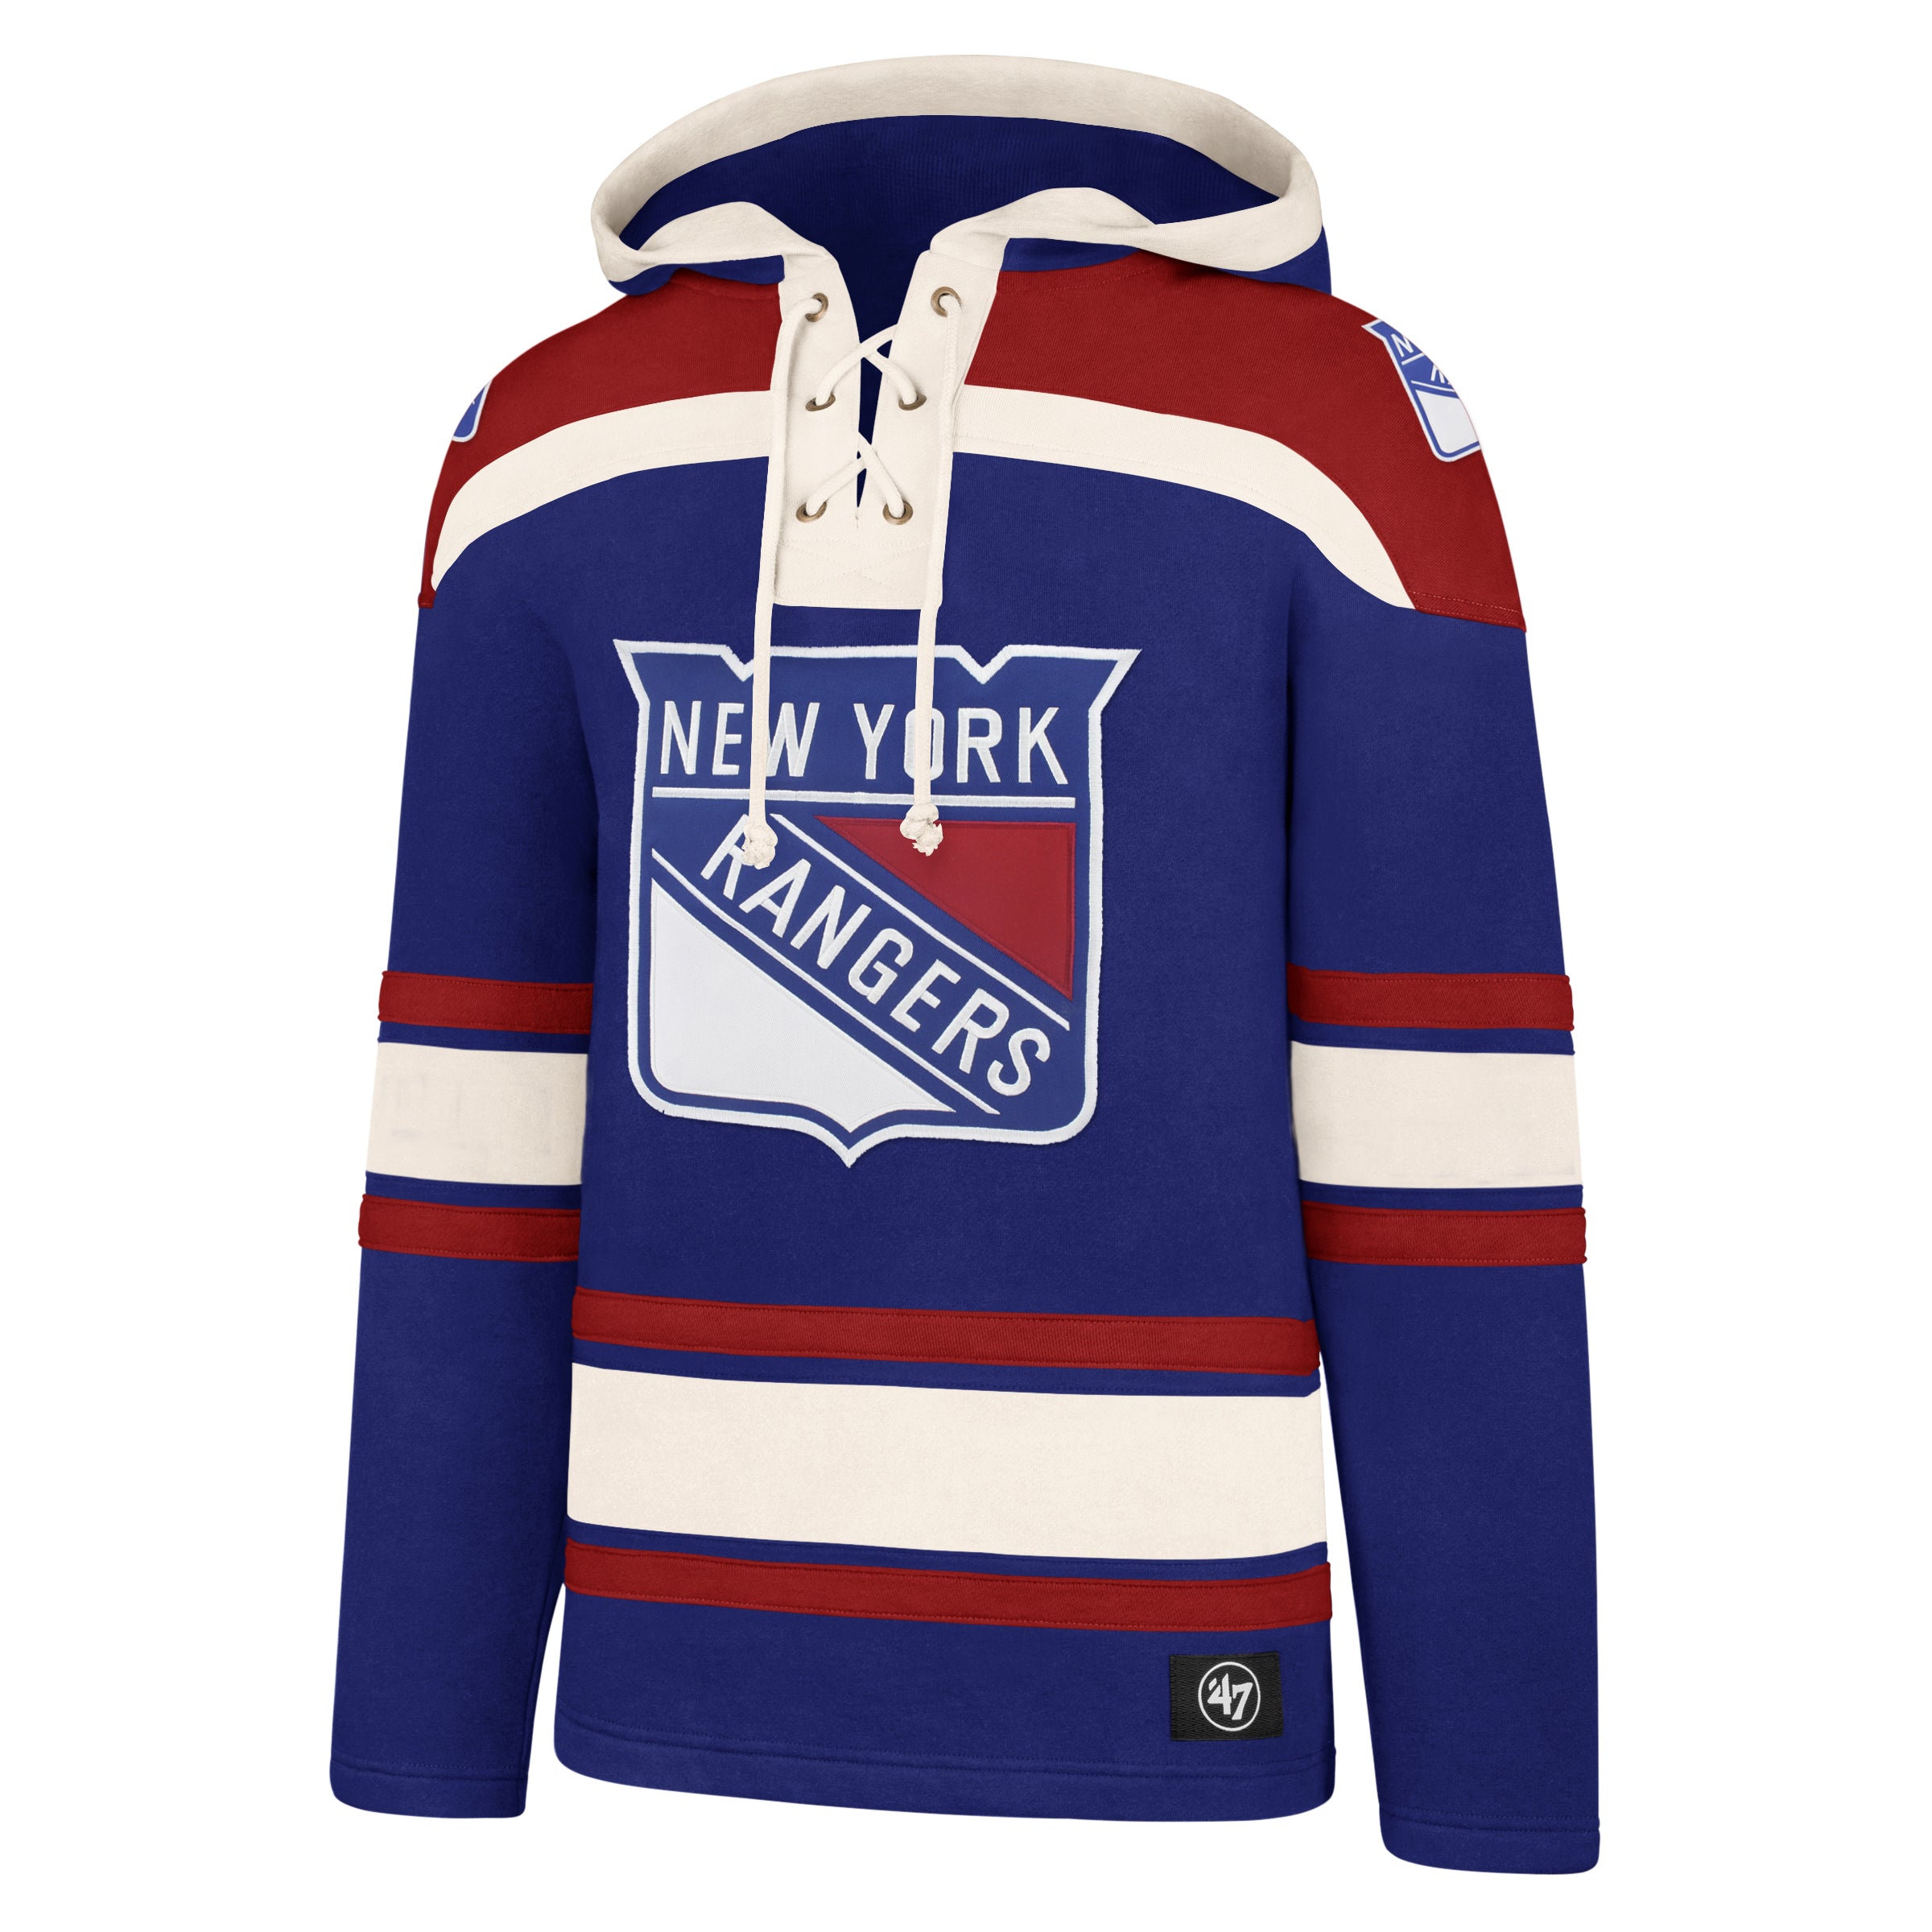 New York Rangers '47 Lacer Hoodie